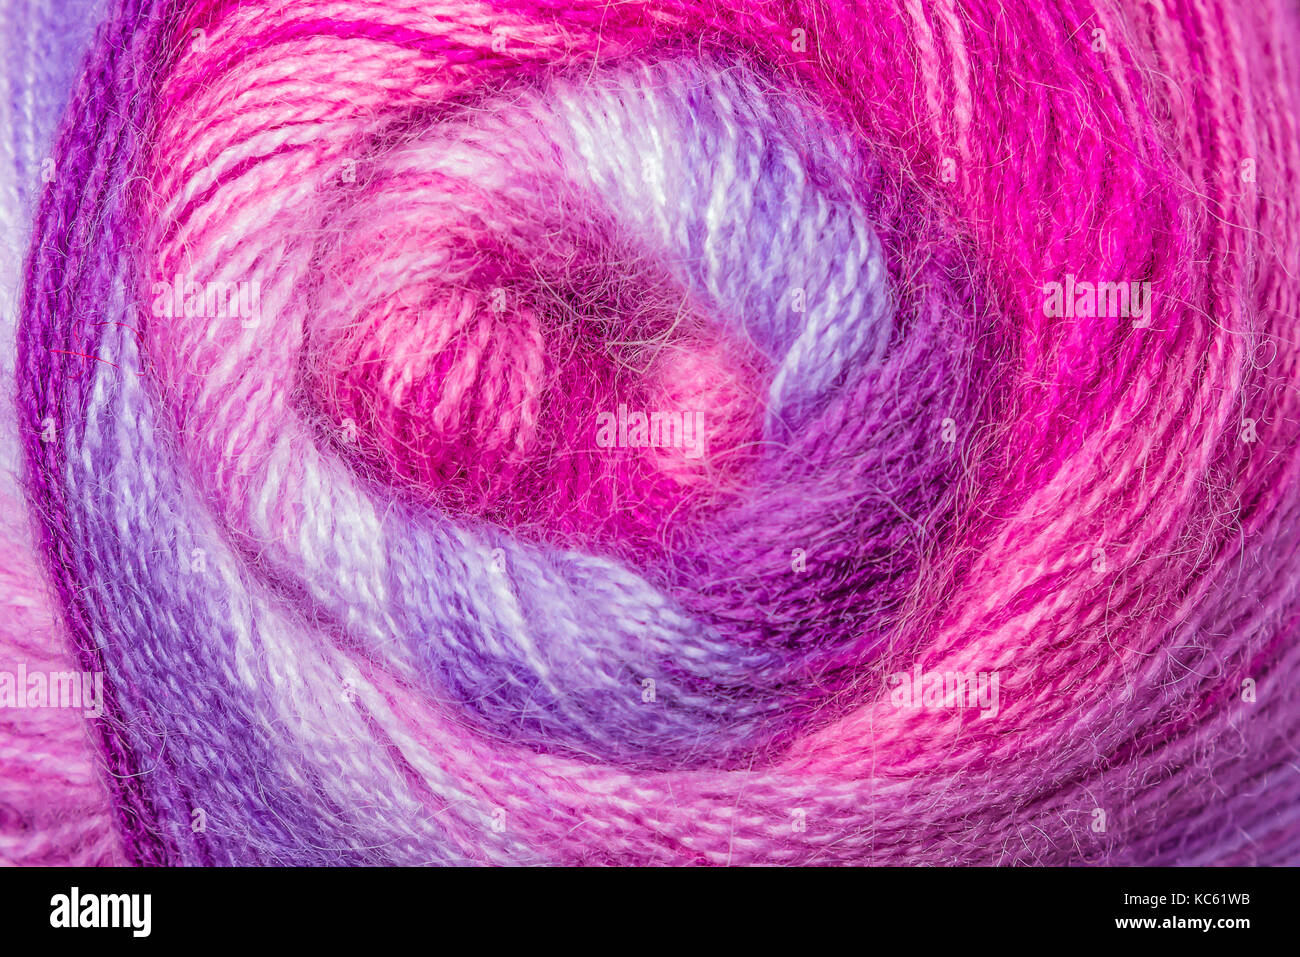 A super close up image of amethyst yarn Background of purple yarn ...